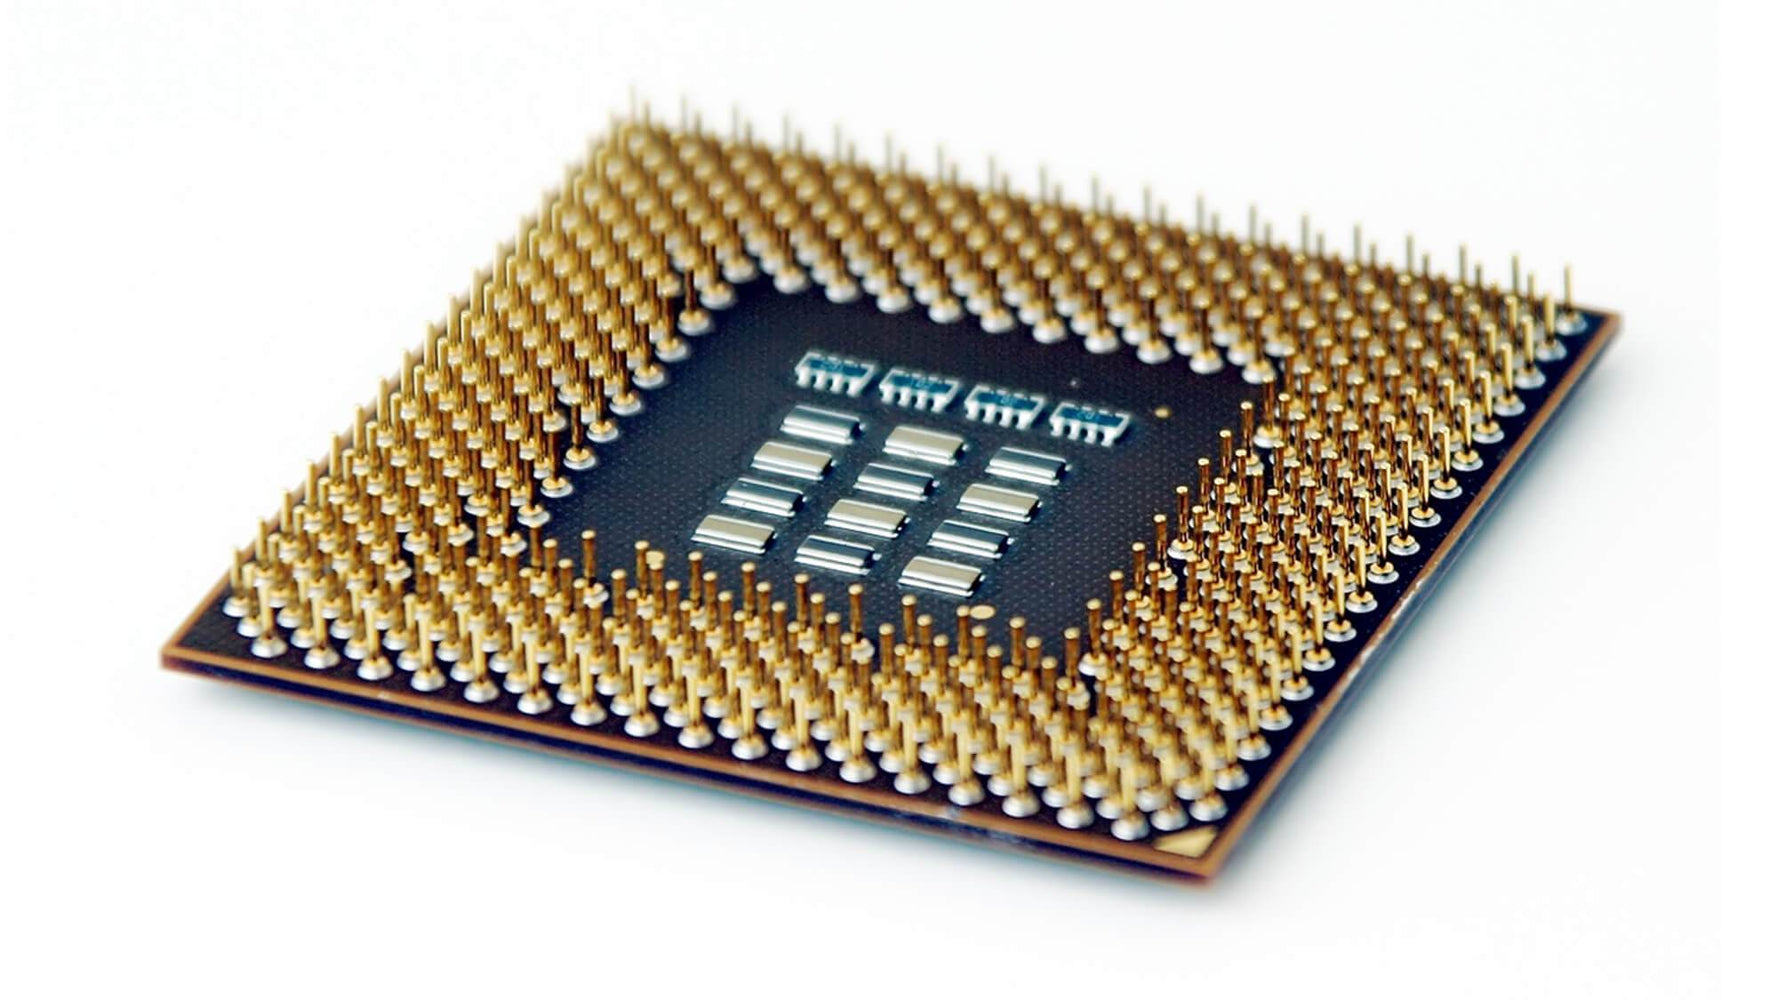 BX80621E52440 - Intel Xeon 6 Core E5-2440 2.4GHz 15MB SMART Cache 7.2GT/S QPI Socket FCLGA-1356 32NM 95W Processor